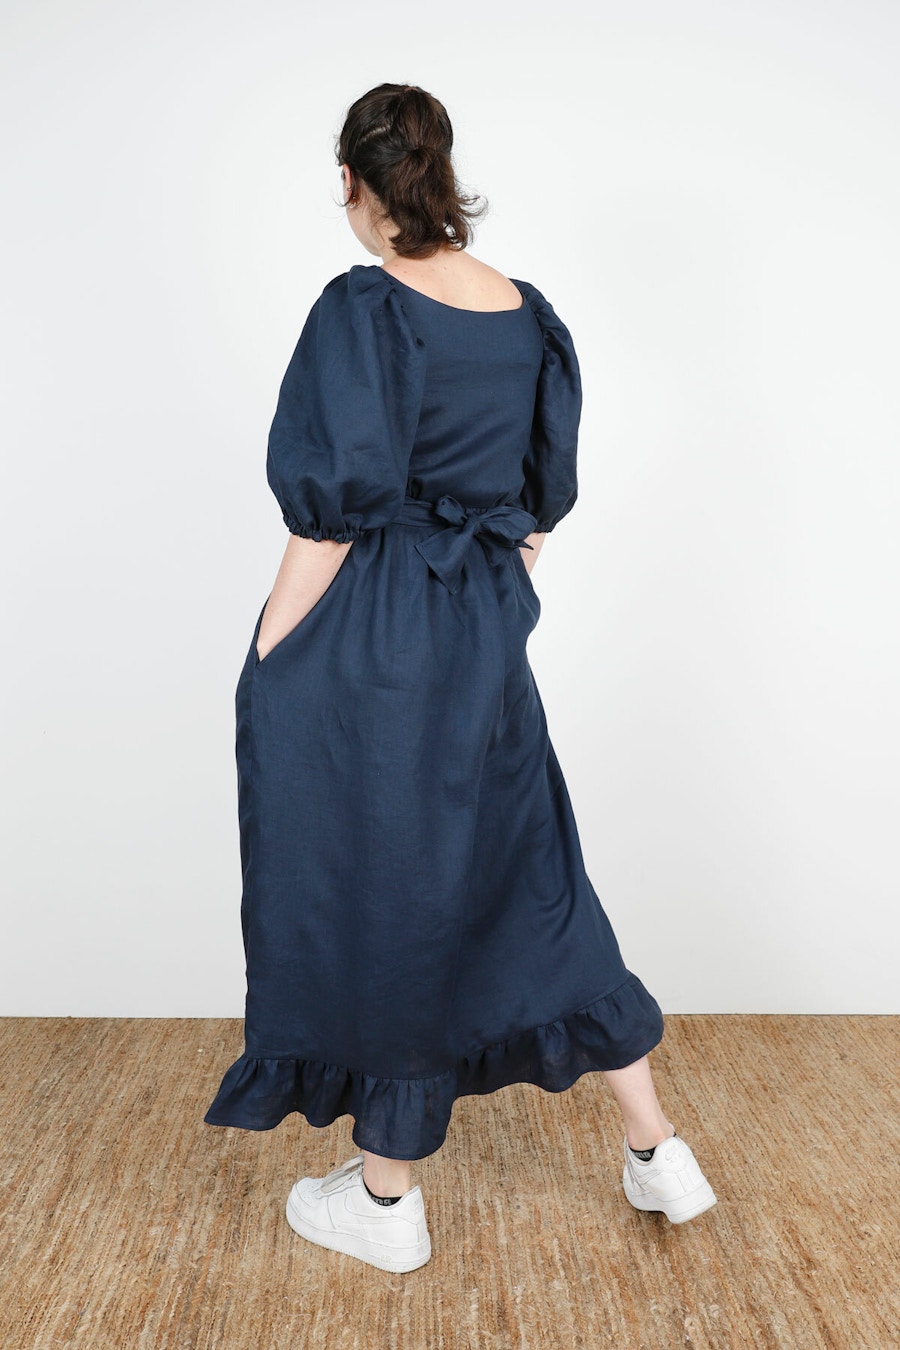 Back Scoop Neck Papercut Patterns Estella Dress Navy Vintage Finish Linen By The Fabric Store Blog